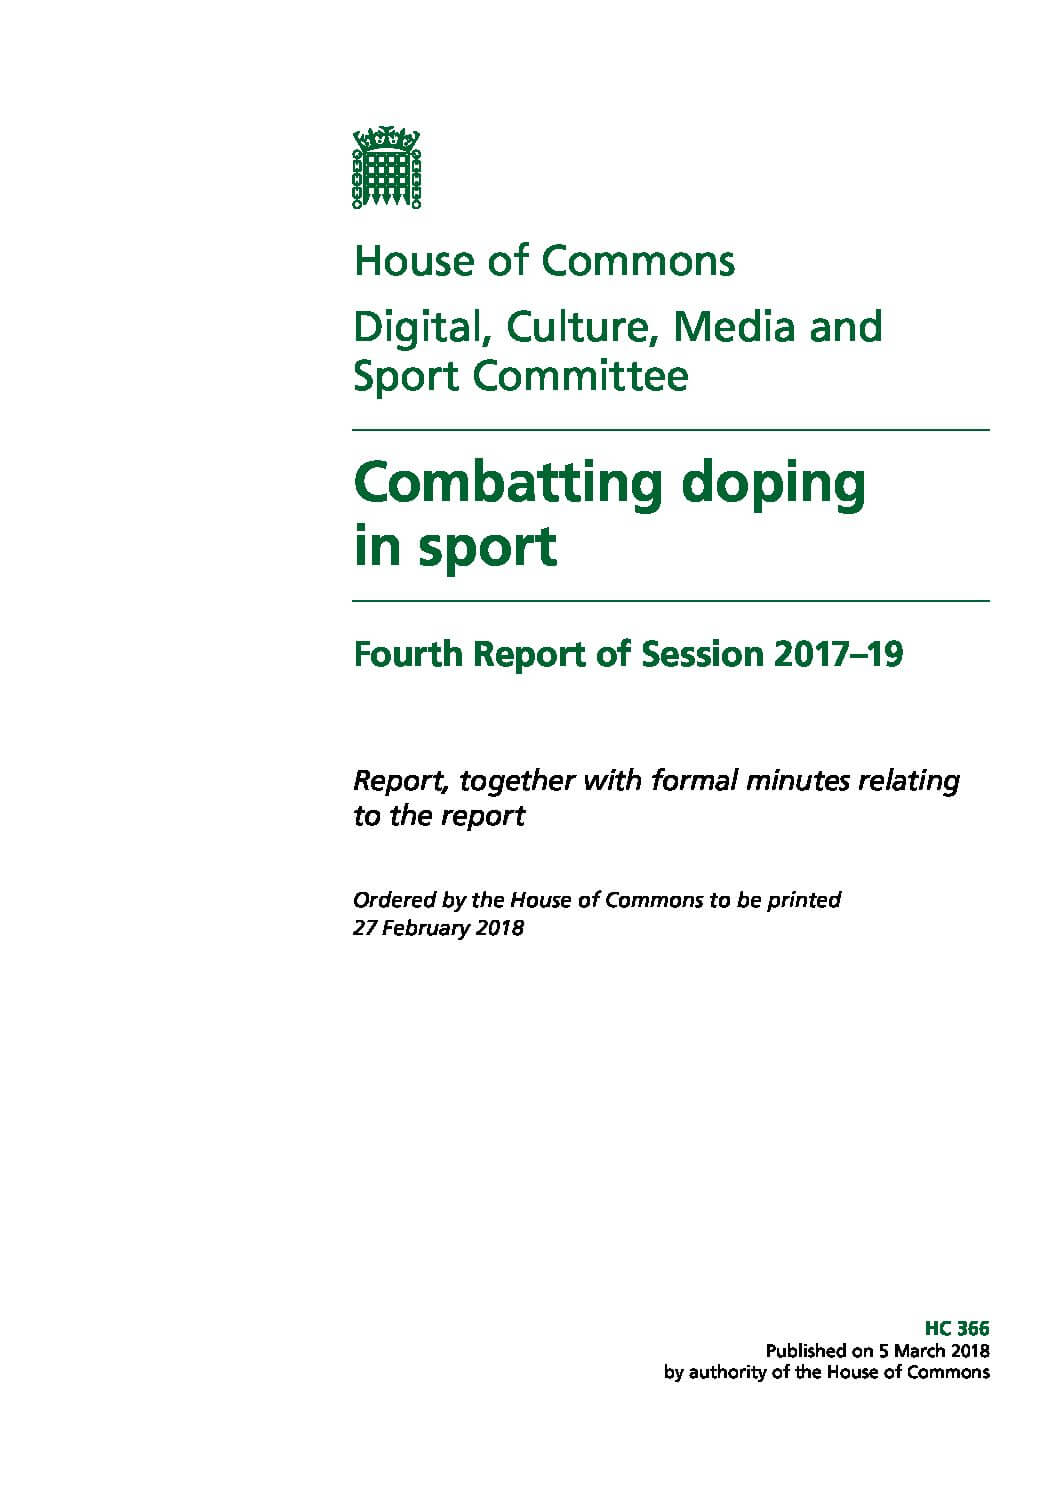 Combatting Doping In Sport